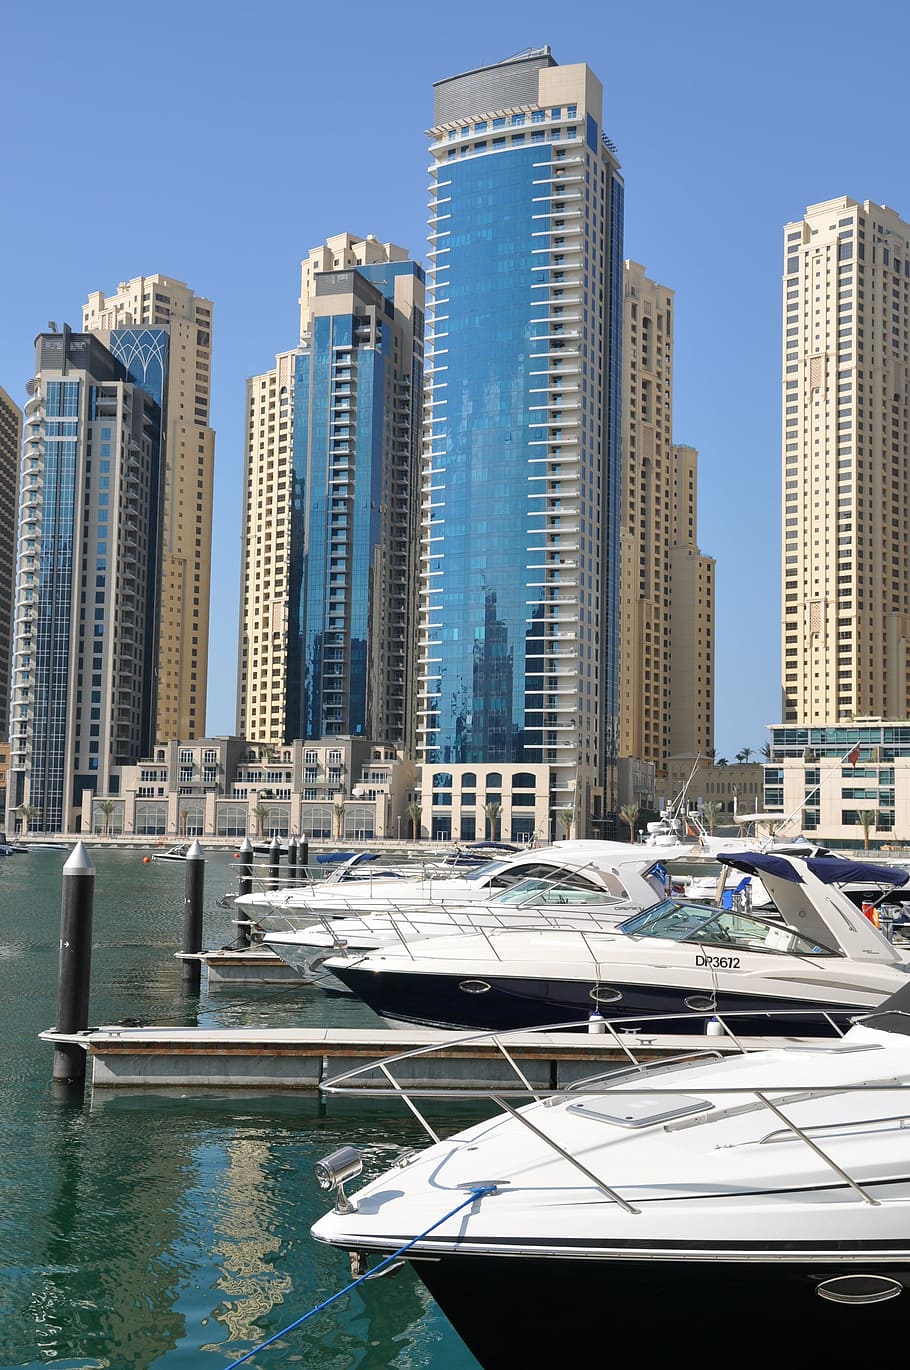 bowrider boats, docks, buildings, distance, dubai, high rise, uae, architecture, united arab emirates, dubai marina